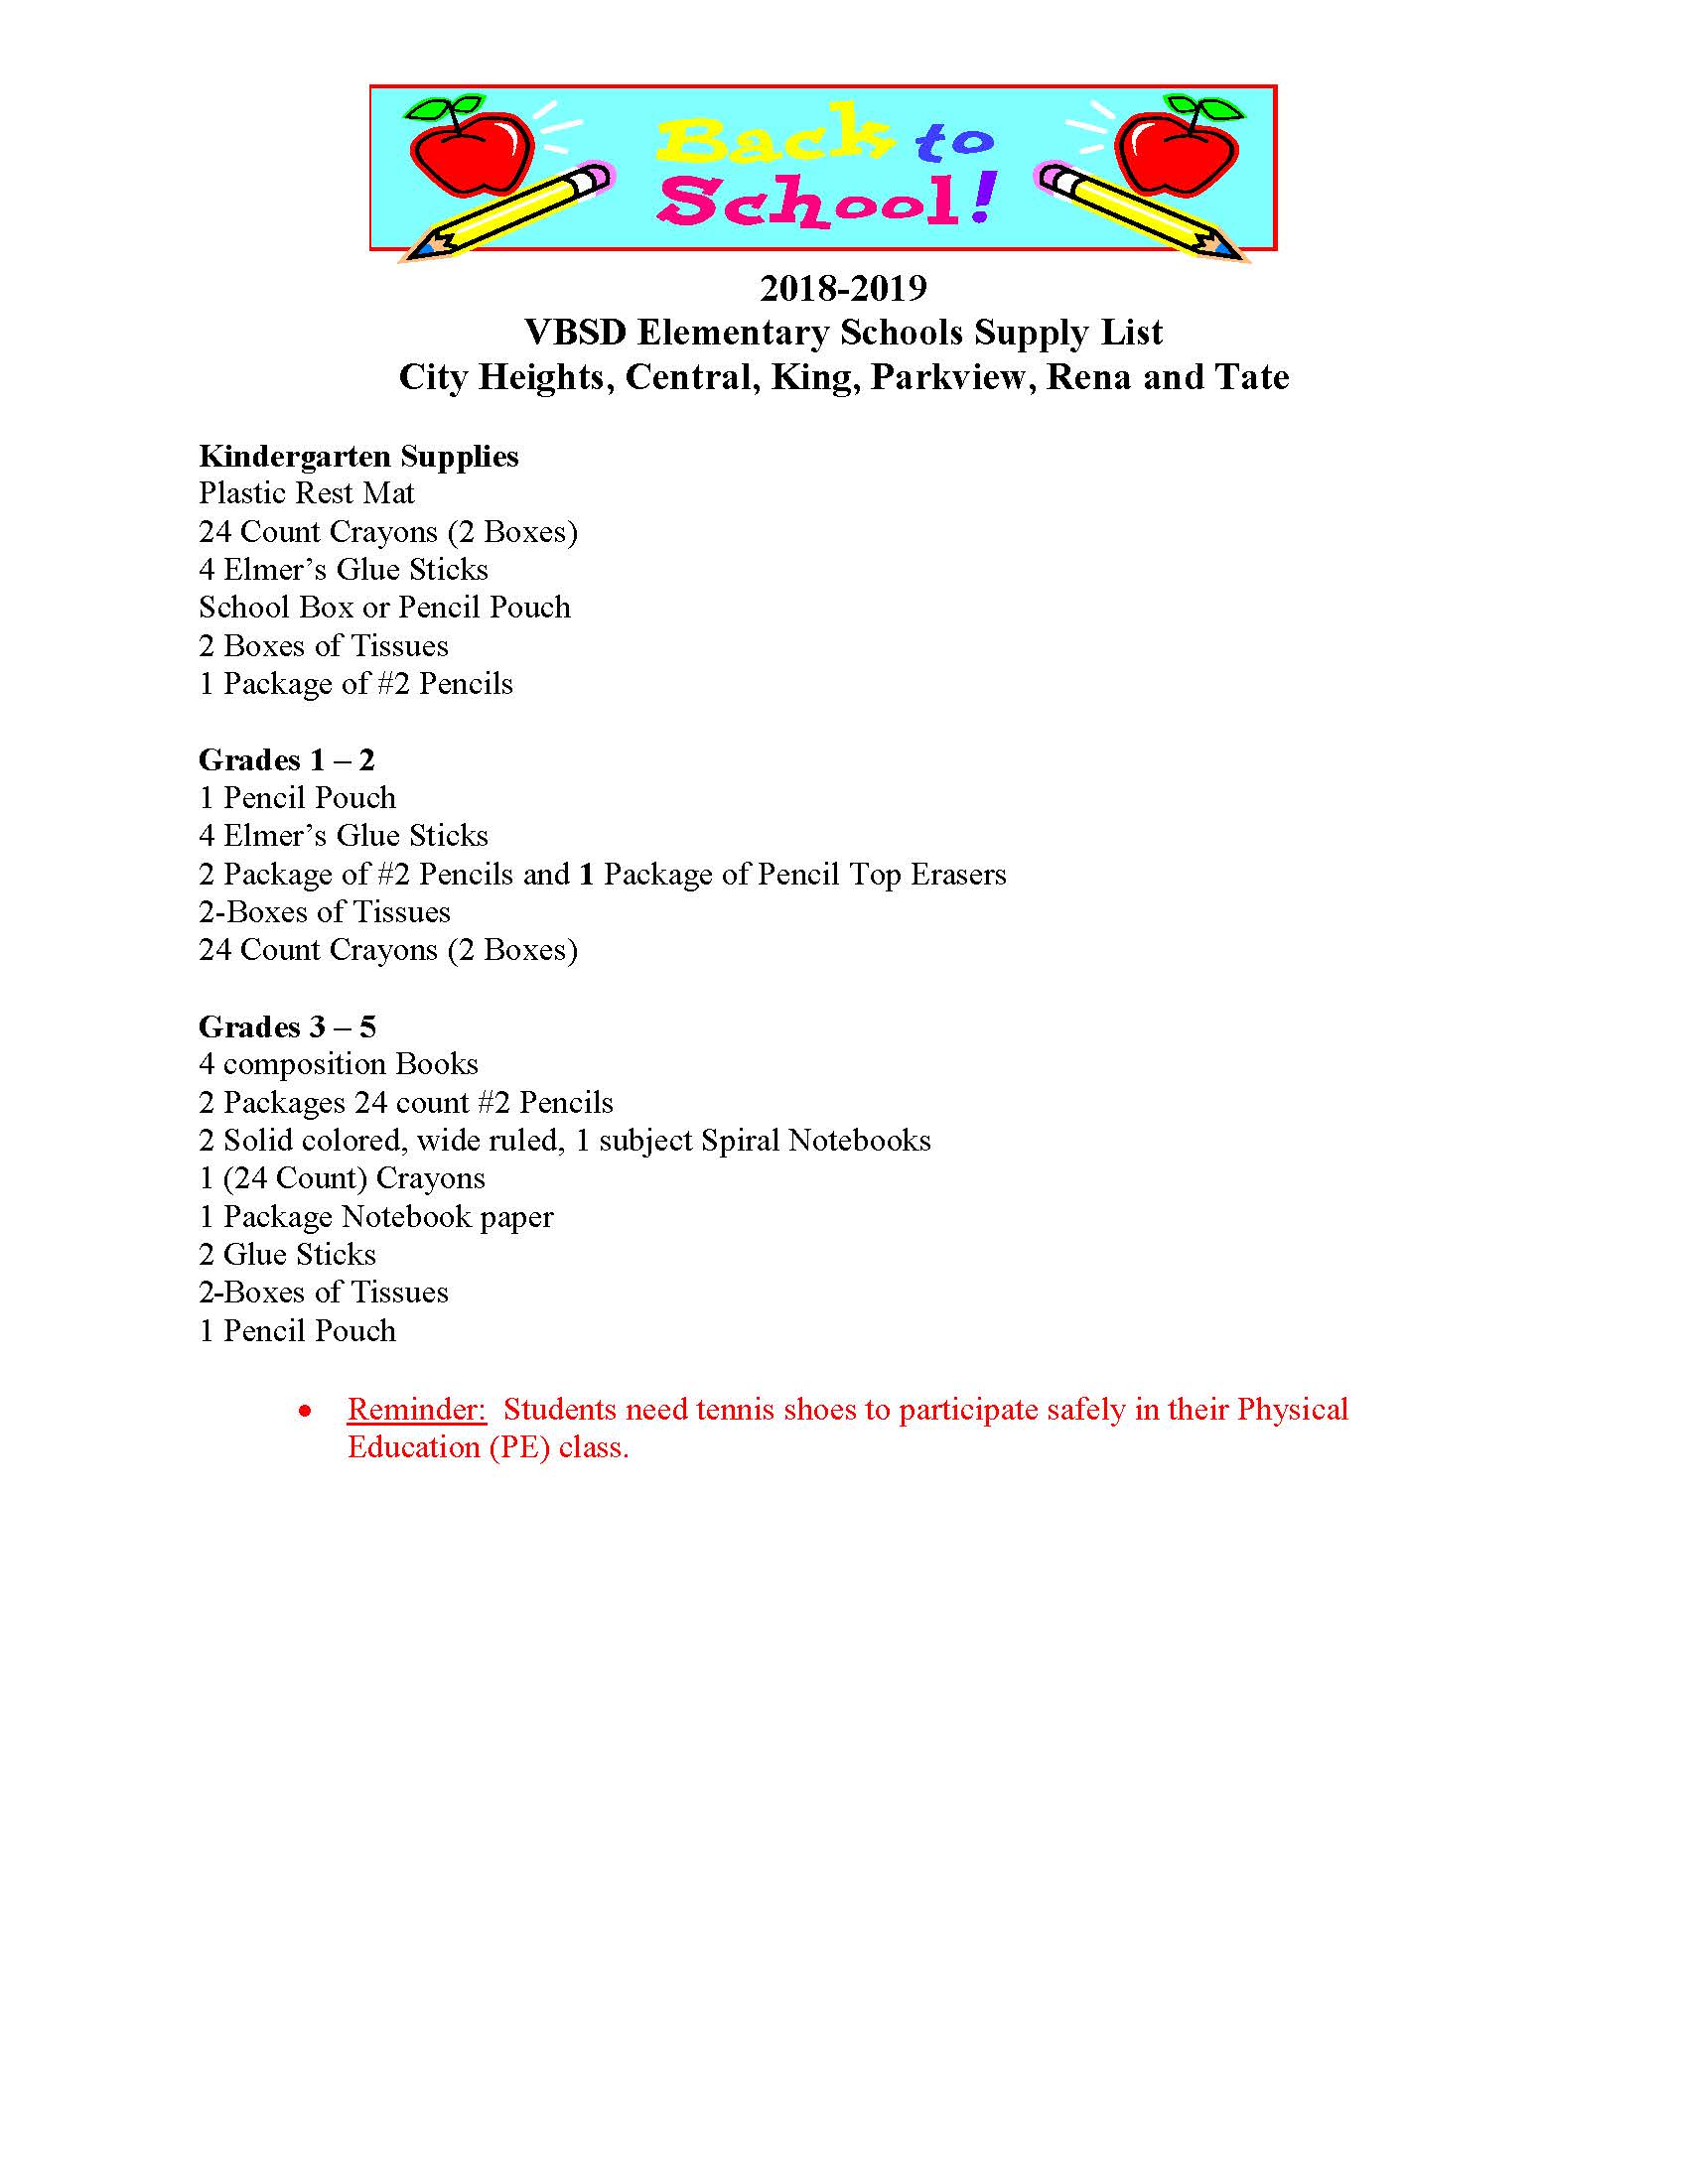 School Supply List 18-19 PV